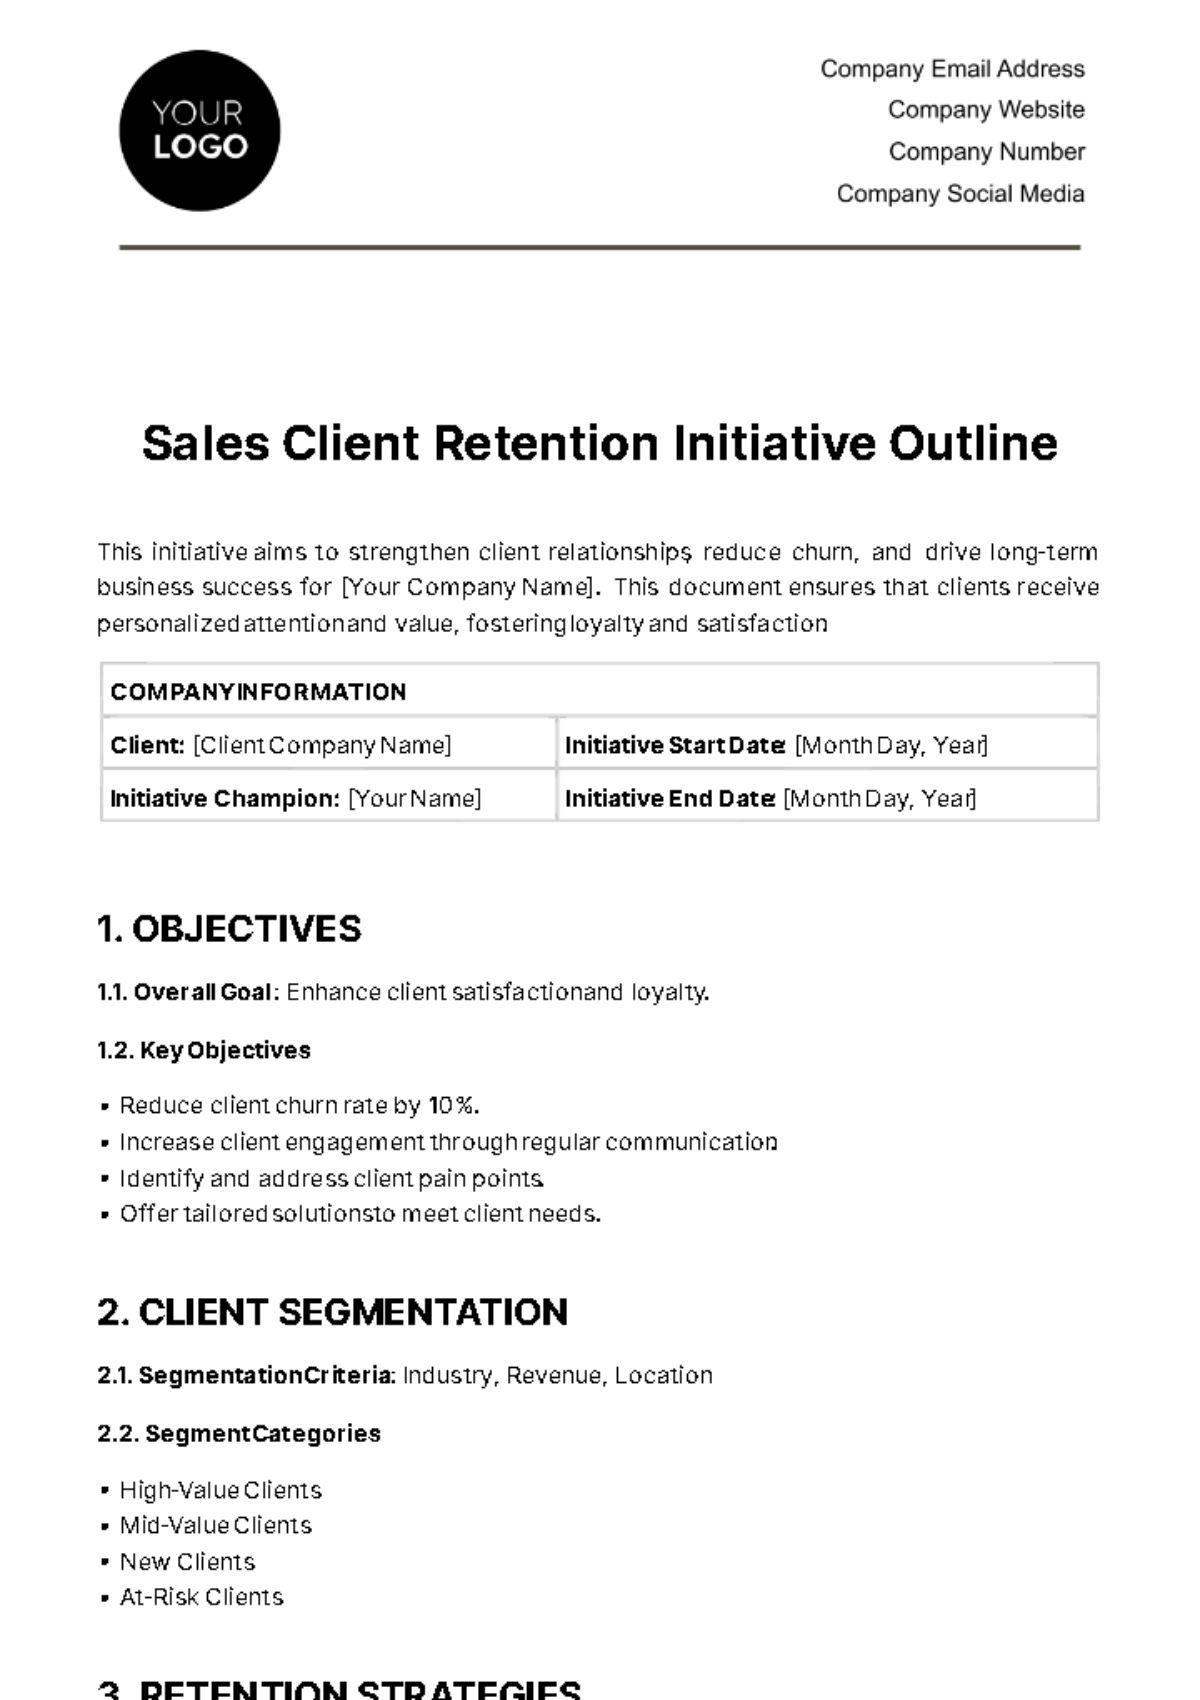 Free Sales Client Retention Initiative Outline Template